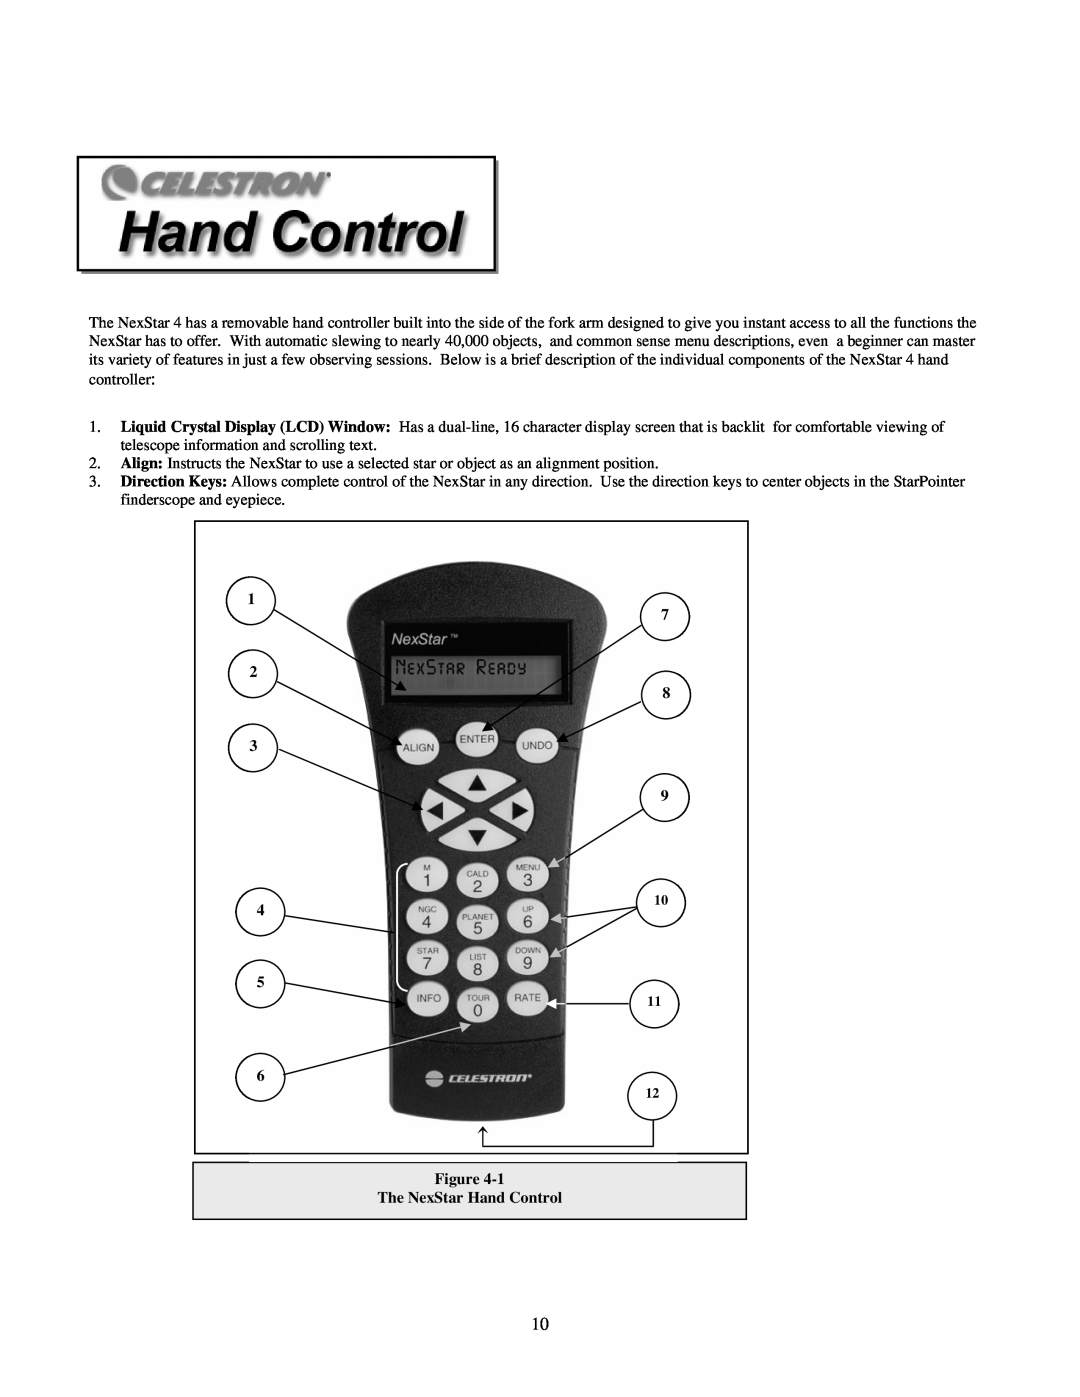 Celestron 4SE instruction manual The NexStar Hand Control 